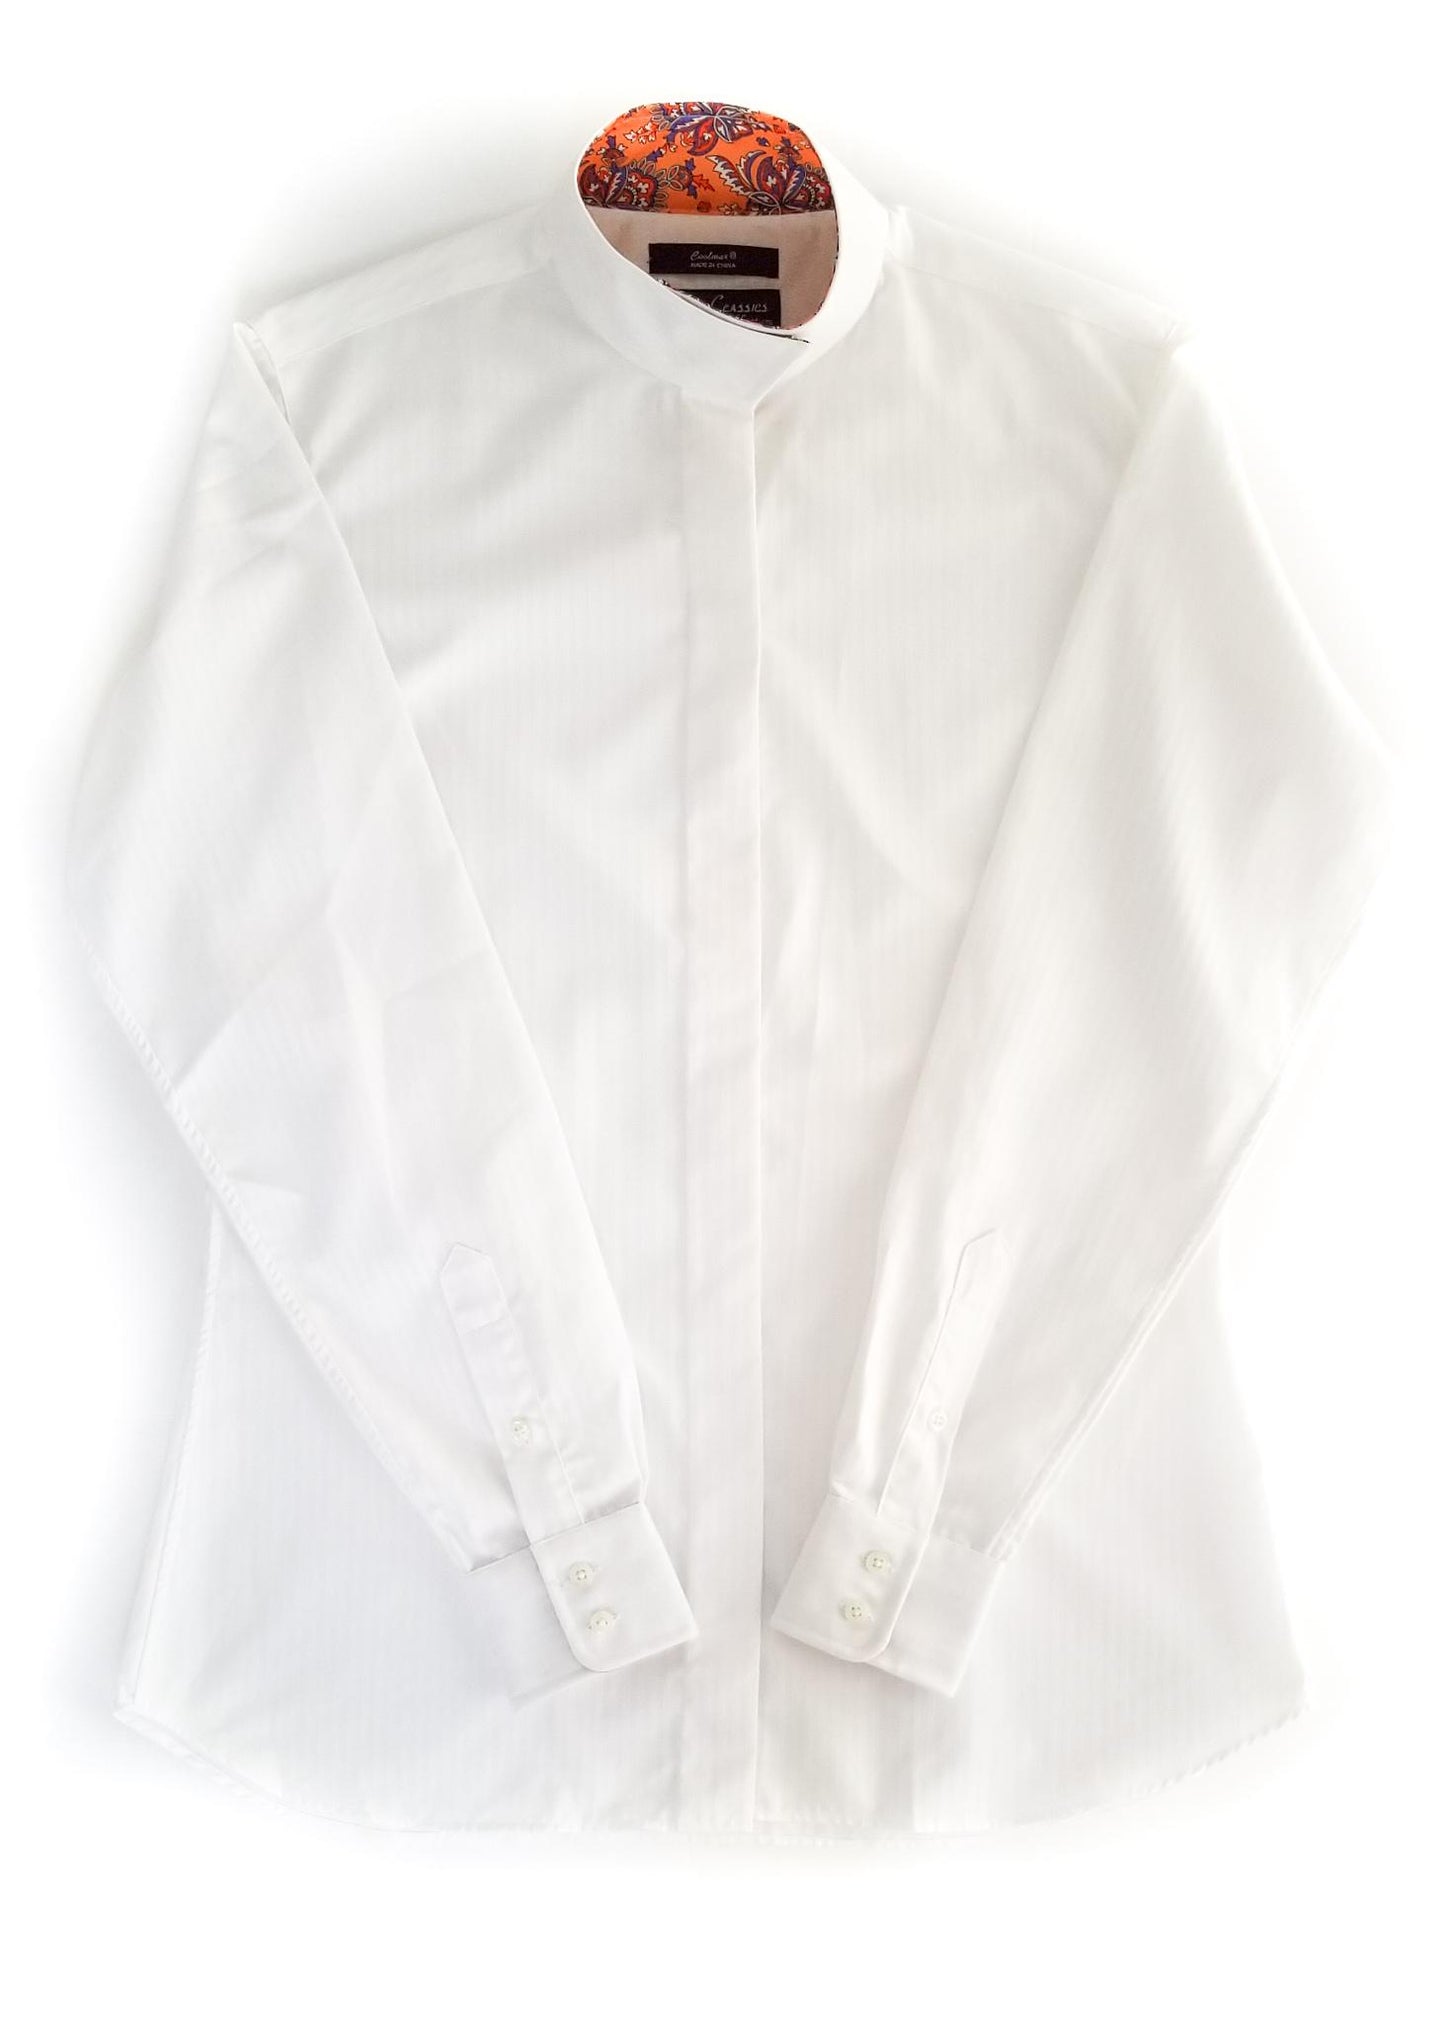 Essex Classics Performance Collection Coolmax Show Shirt - White - Women's 36